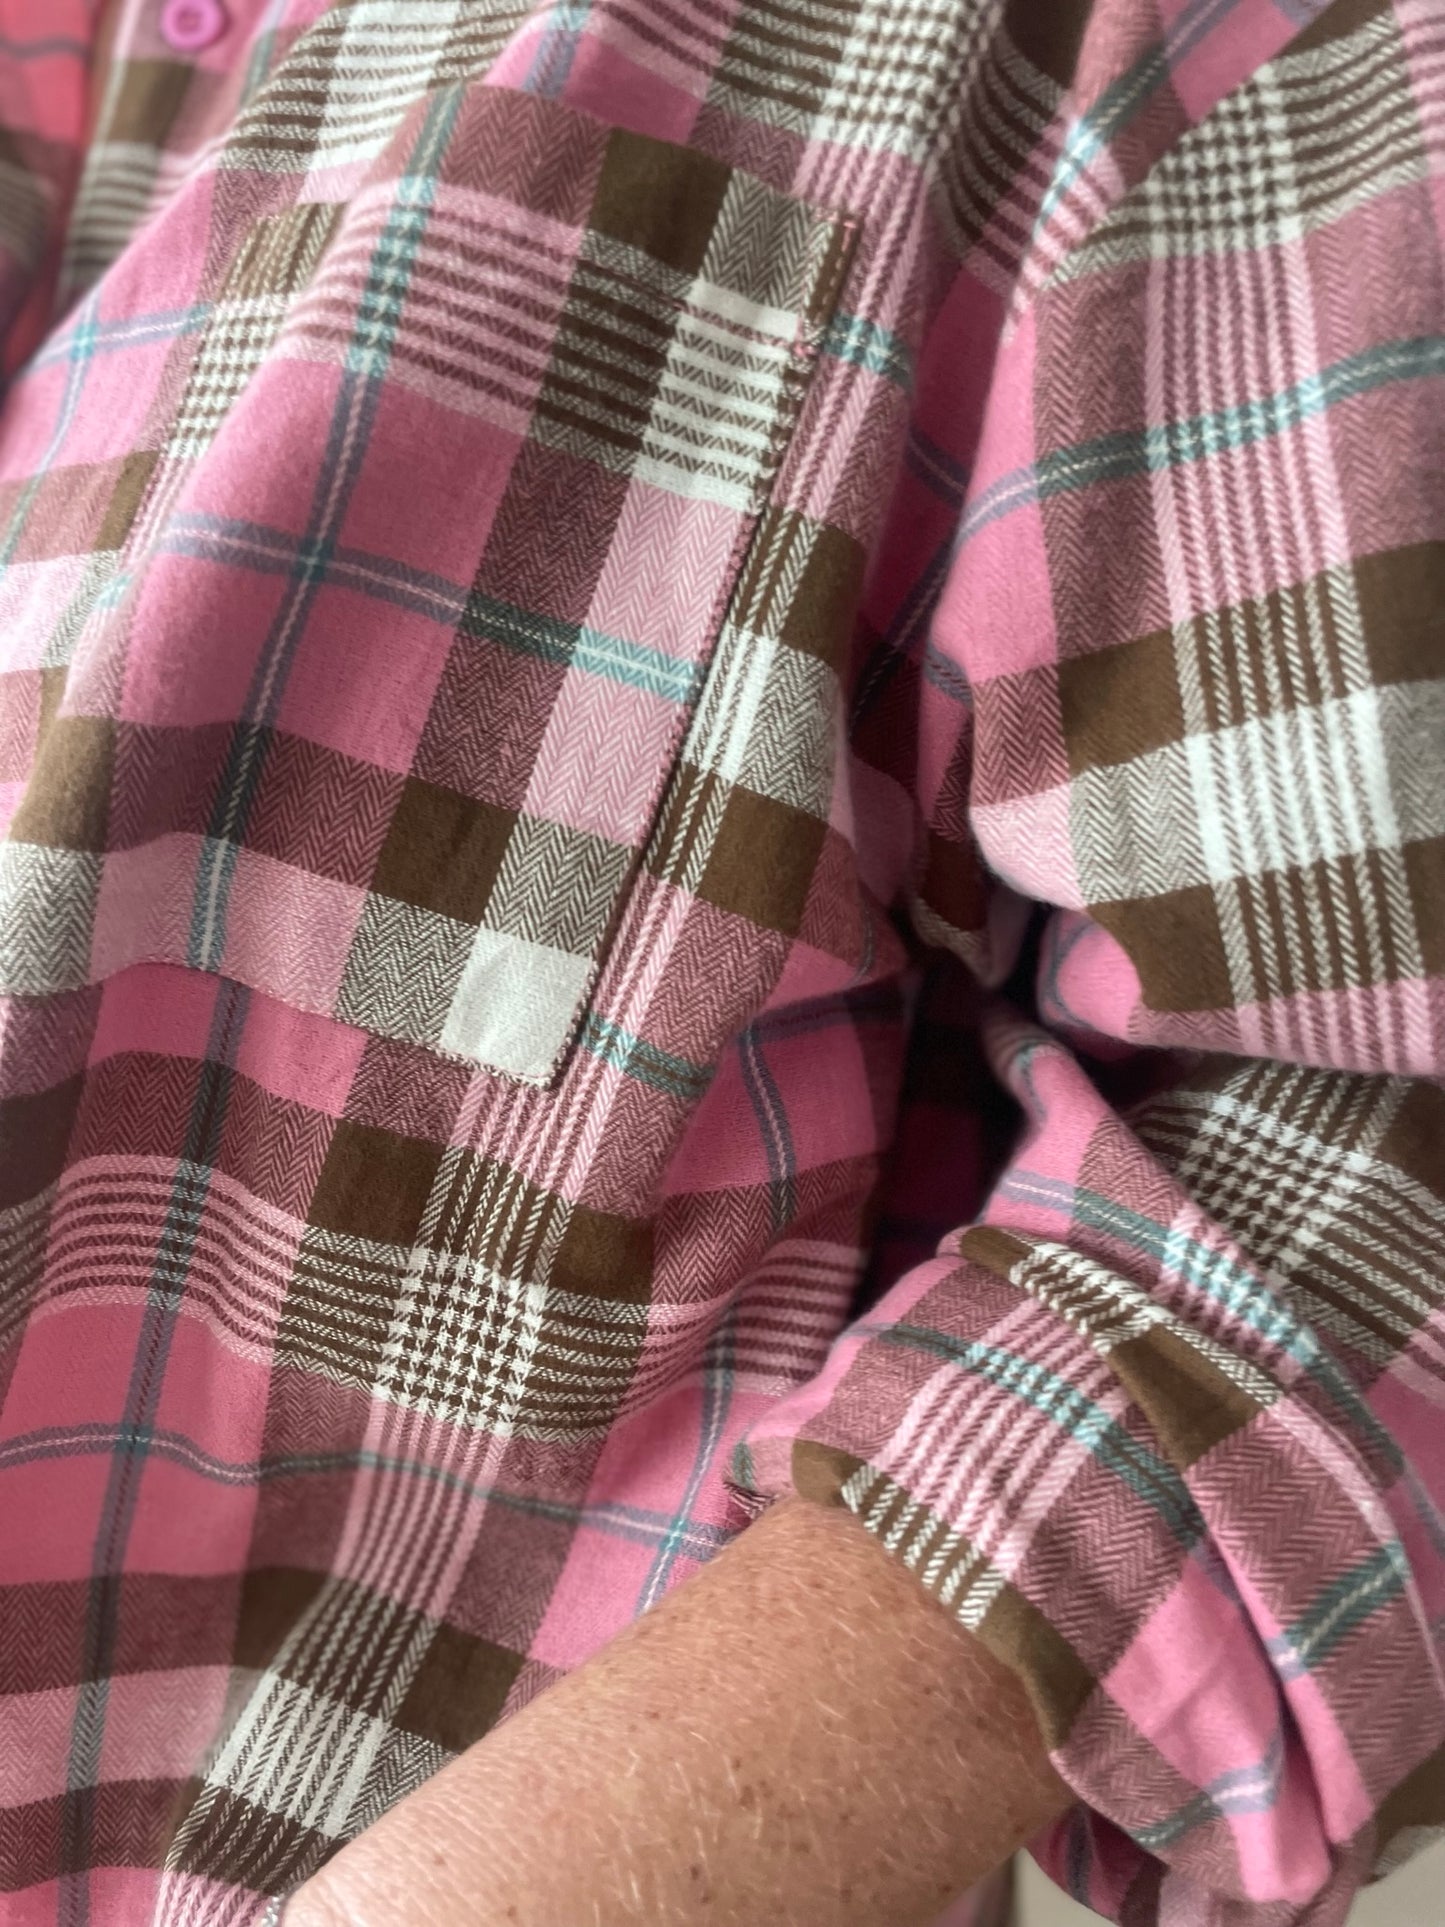 Plaid Cropped Shirt - Pink